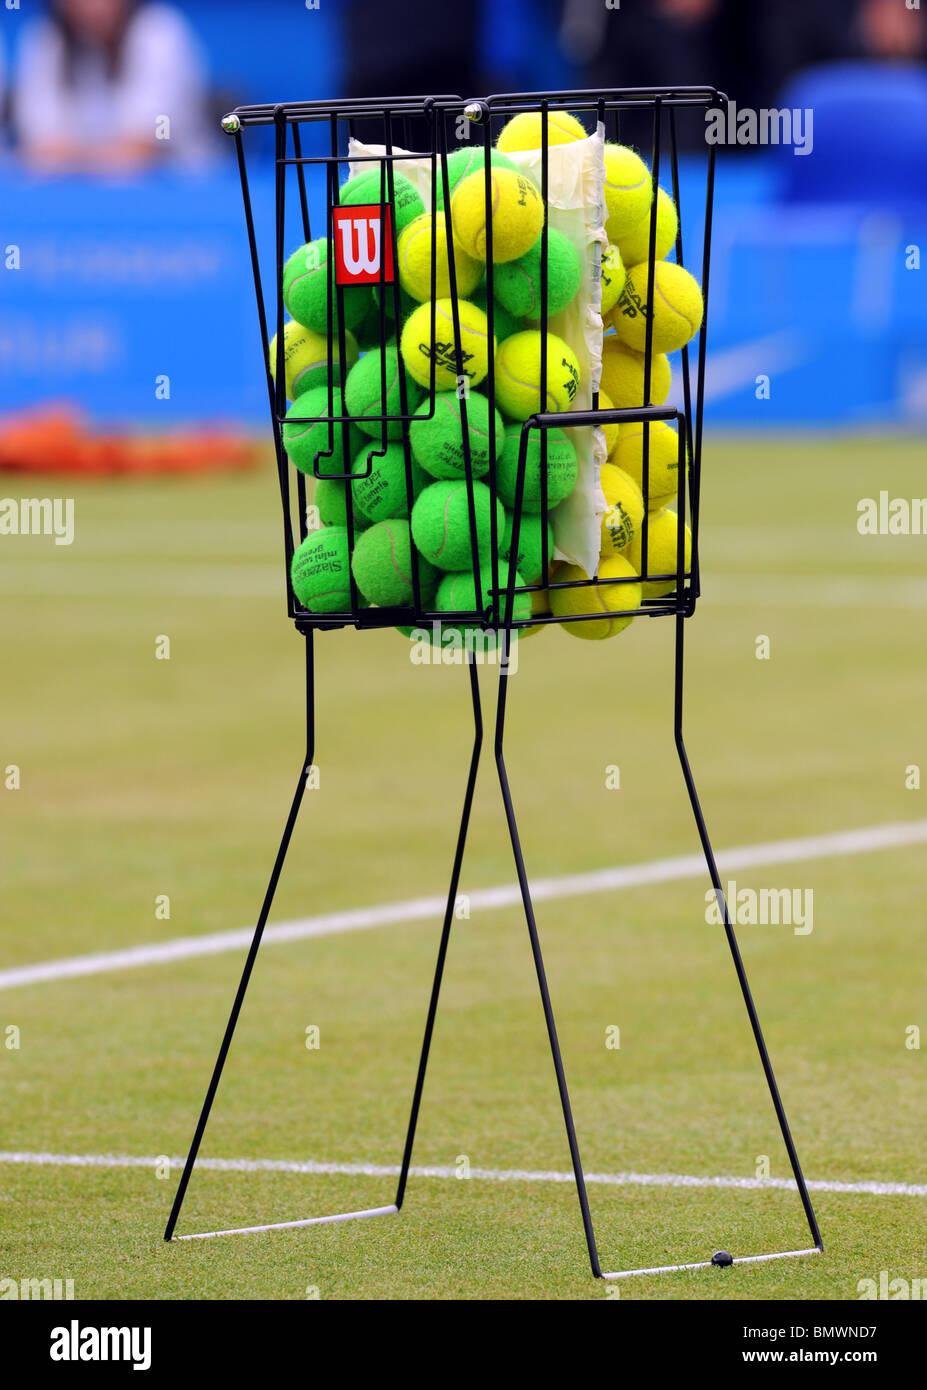 Canasta de pelota de tenis fotografías e imágenes de alta resolución - Alamy